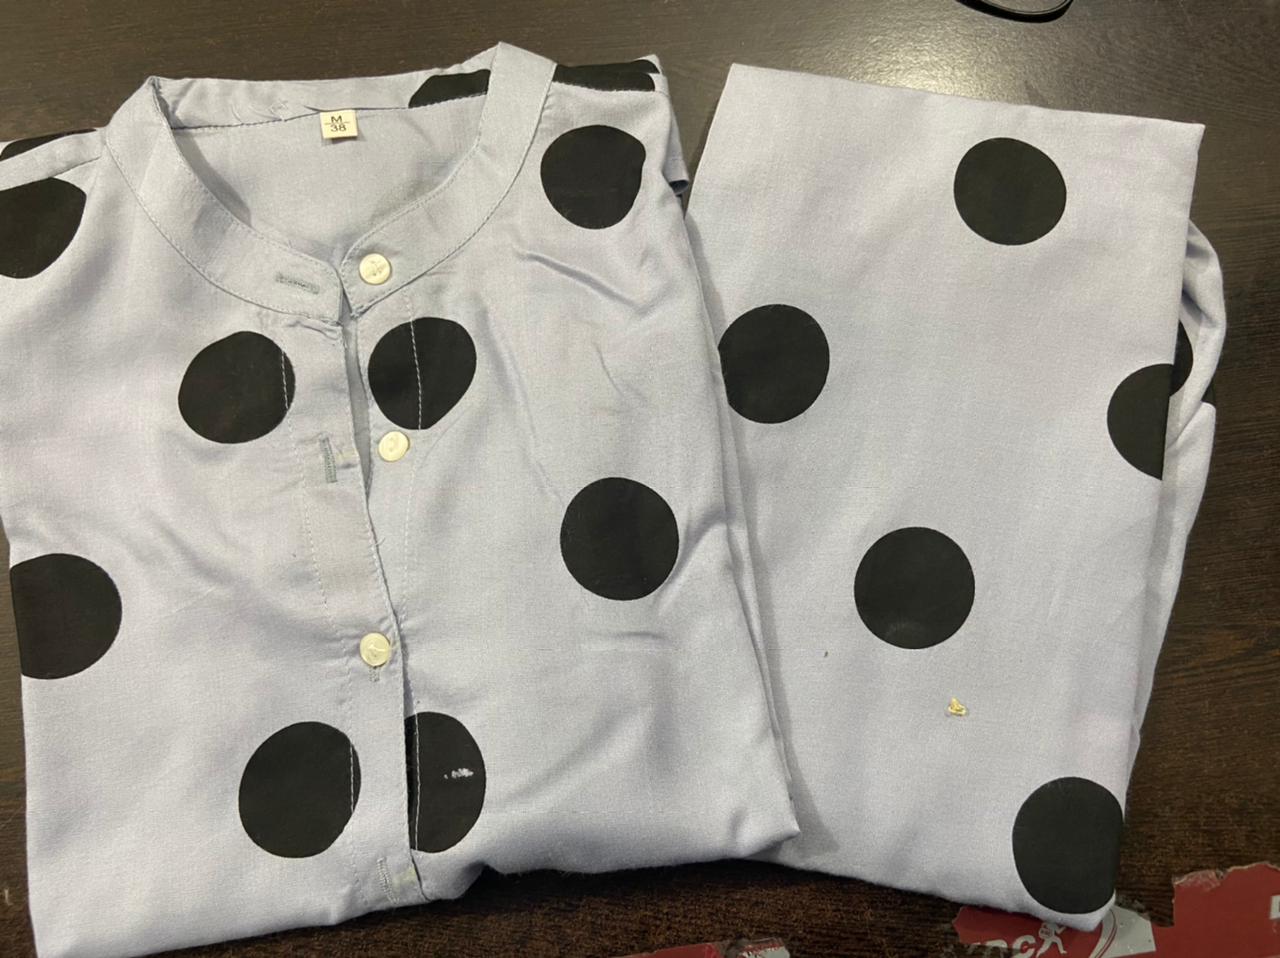 Gray Polka Dots Print Rayon Night Suit